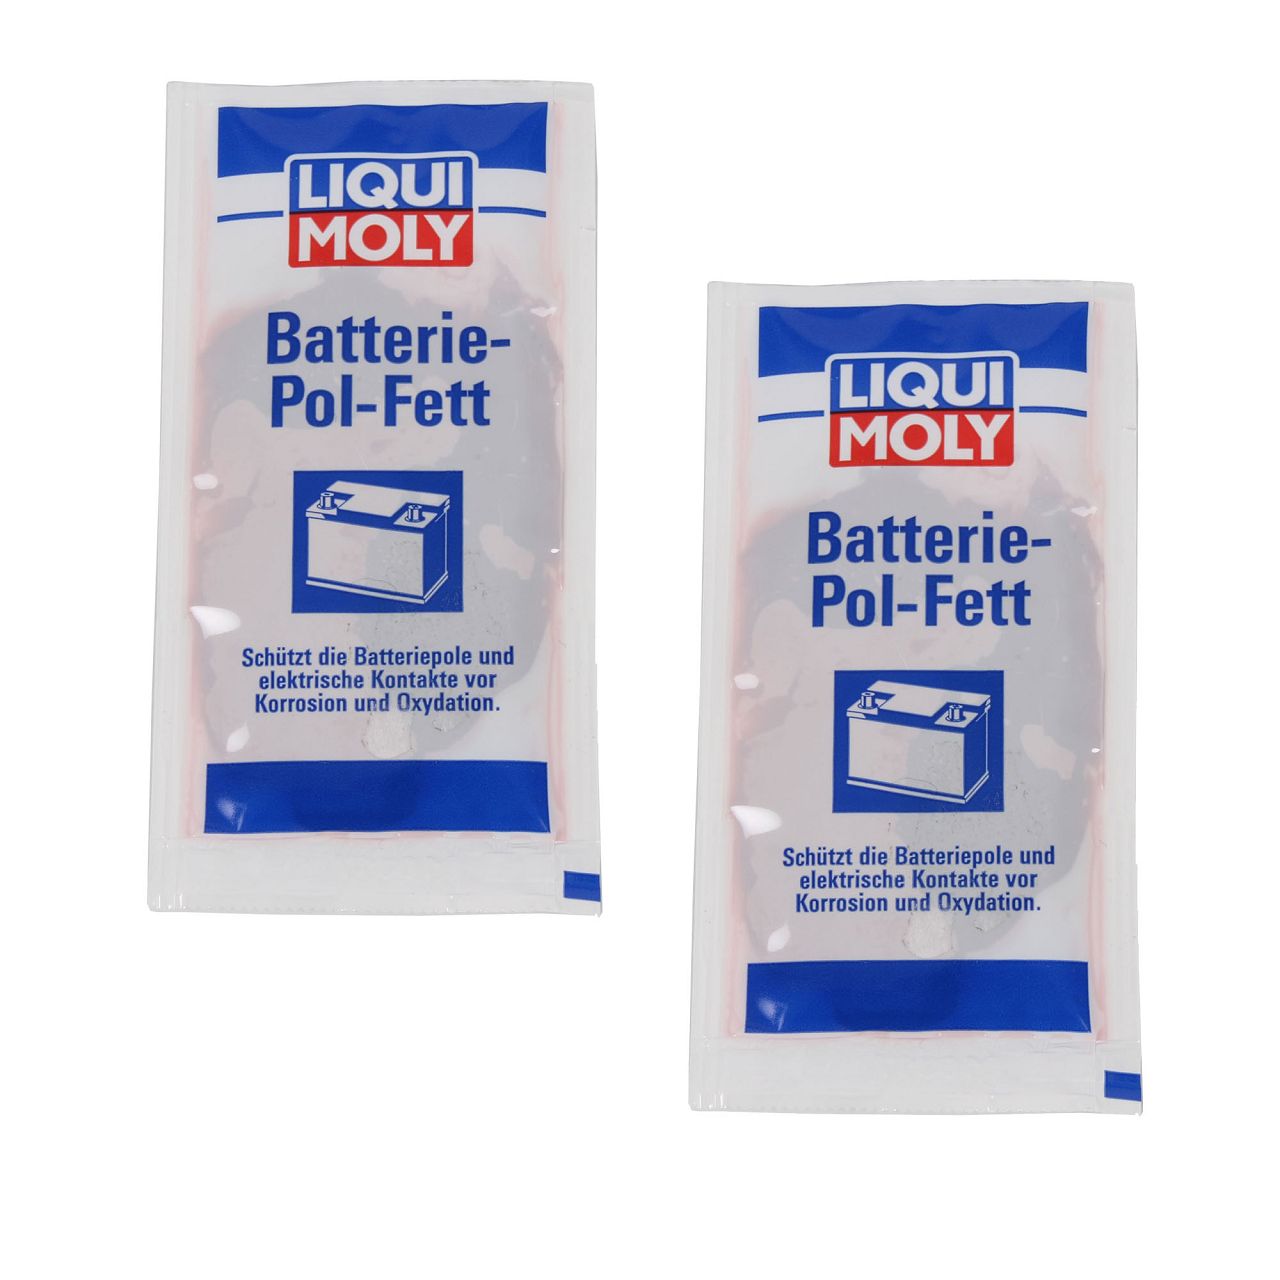 LIQUI MOLY Batterie-Pol-Fett 10g, 2x